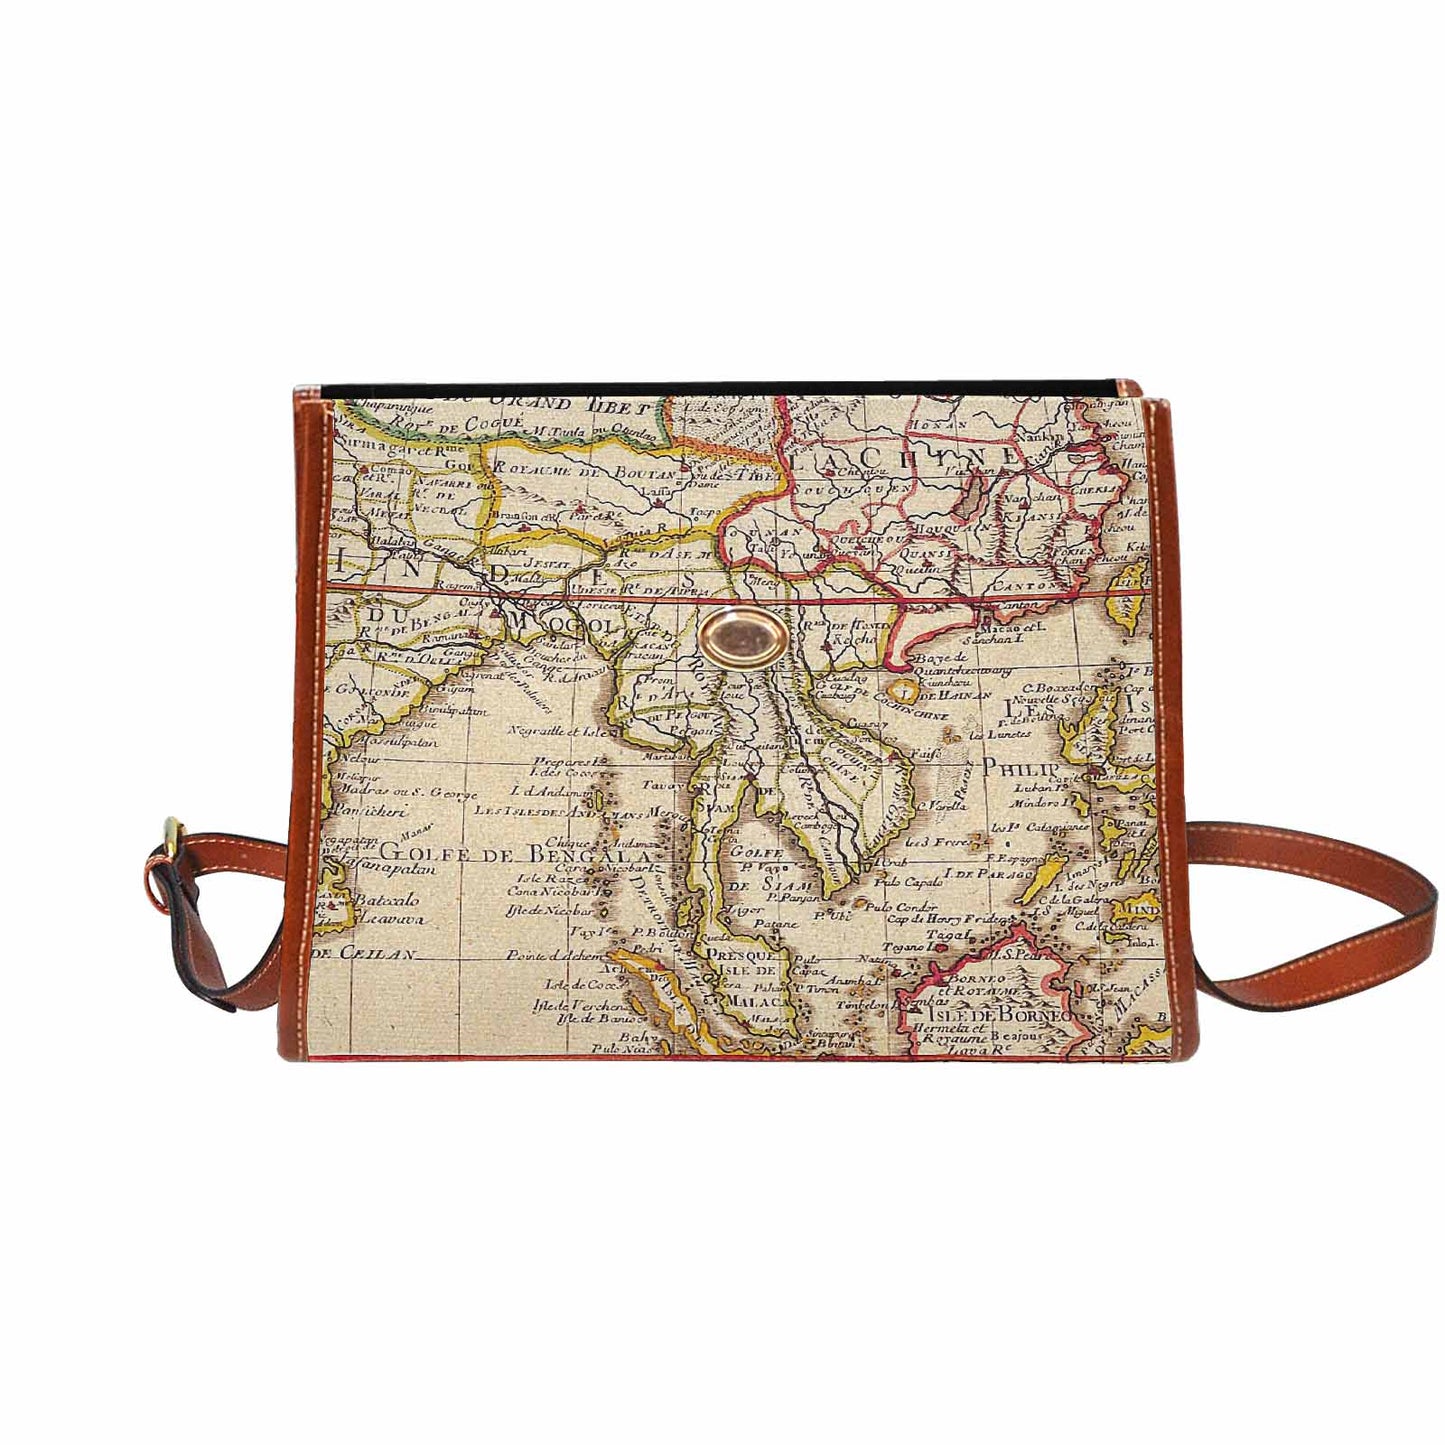 Antique Map Handbag, Model 1695341, Design 10